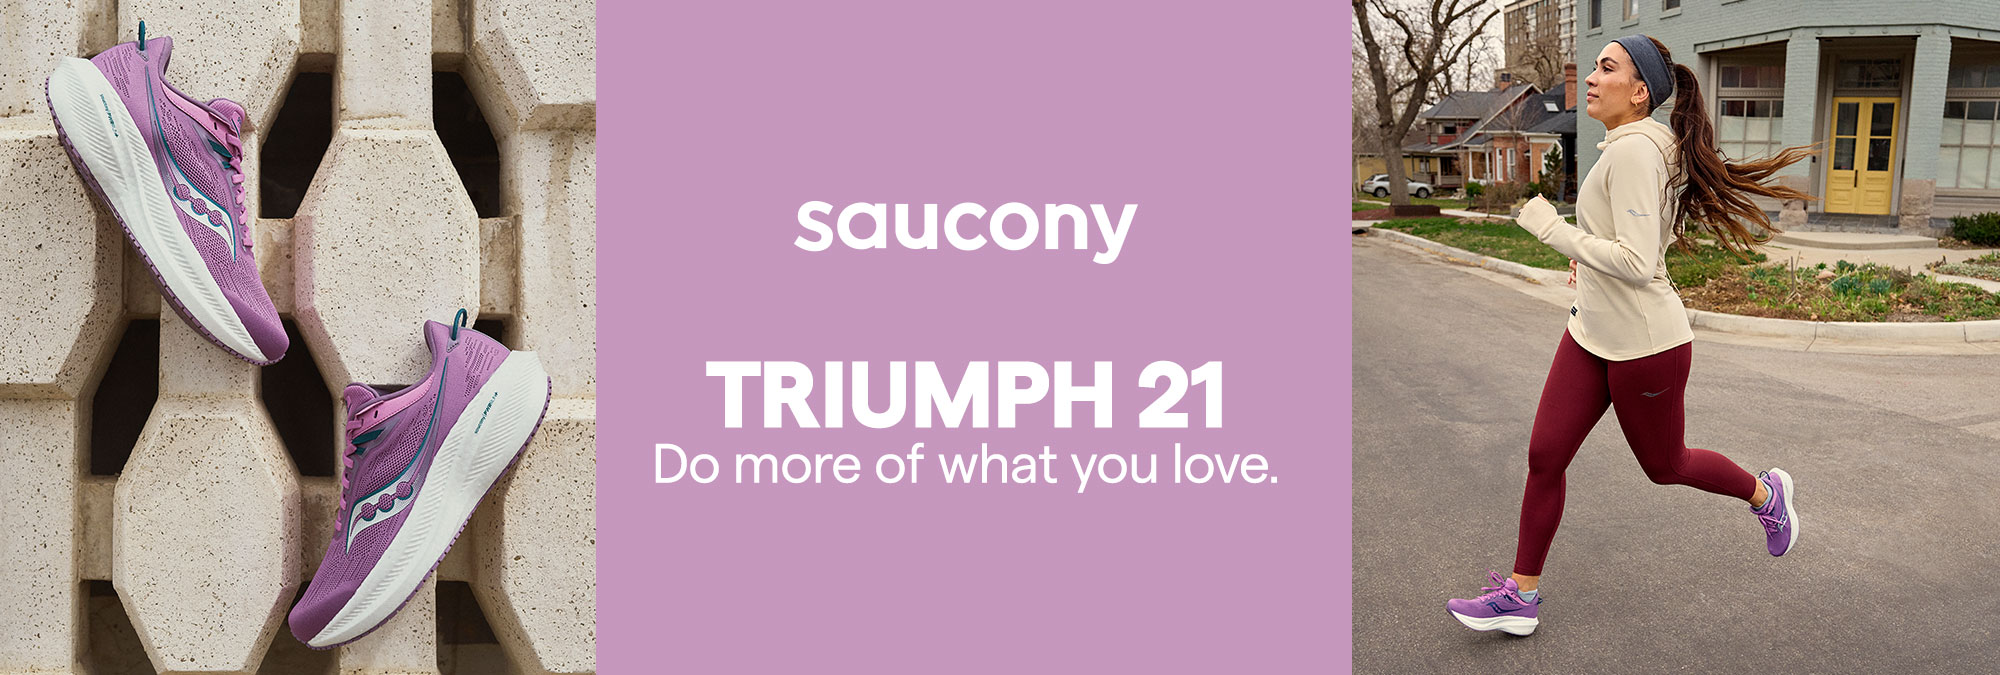 Saucony Triumph 21 - Saucony - Brands